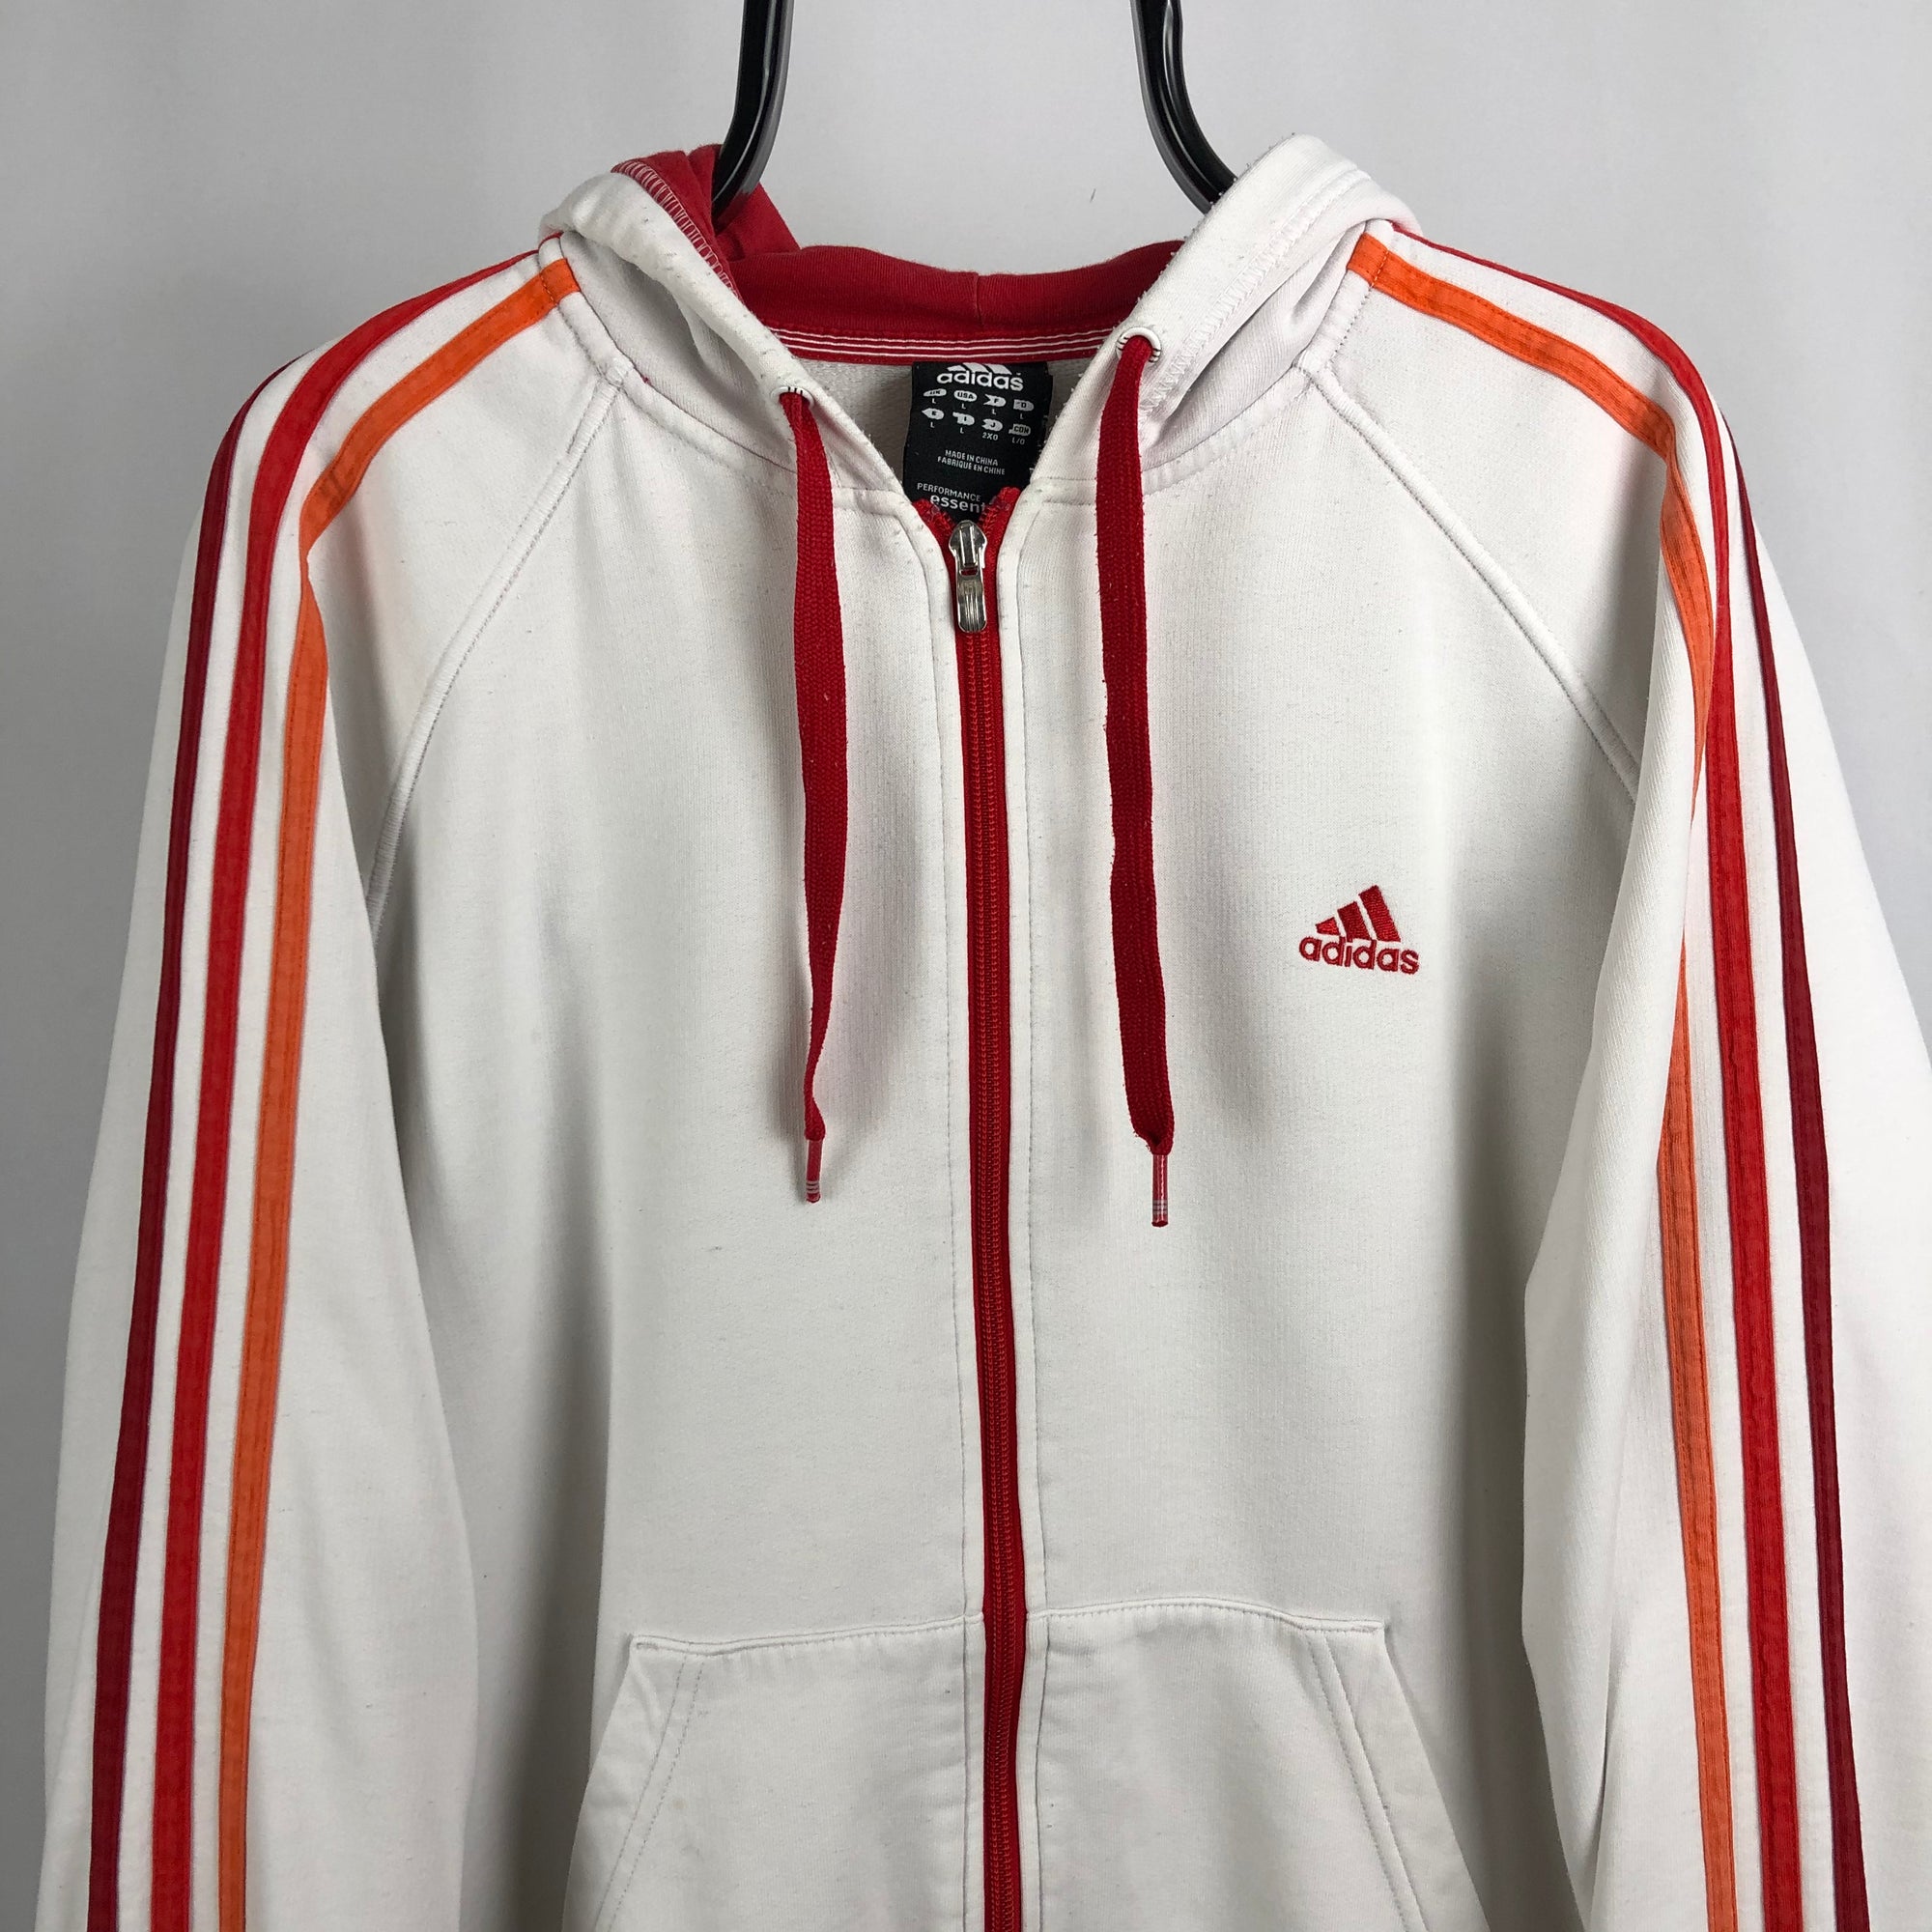 Adidas Zip Hoodie in White/Red - Men's Large/Women's XL